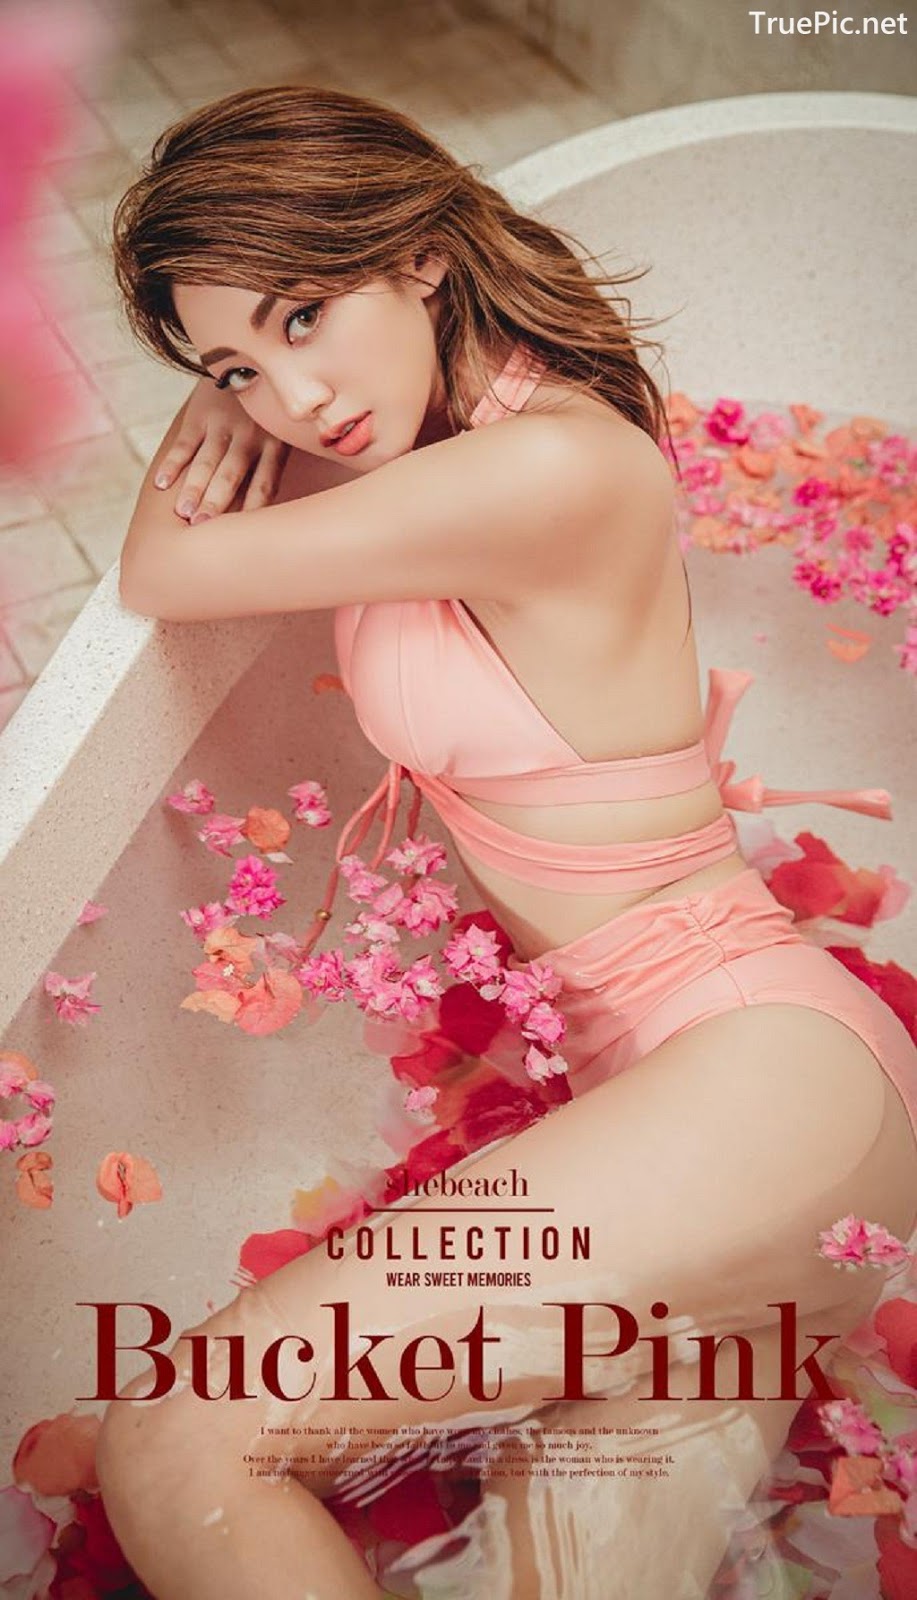 Image Lee Chae Eun - Bucket Pink Bikini - Korean Fashion Model - TruePic.net - Picture-11